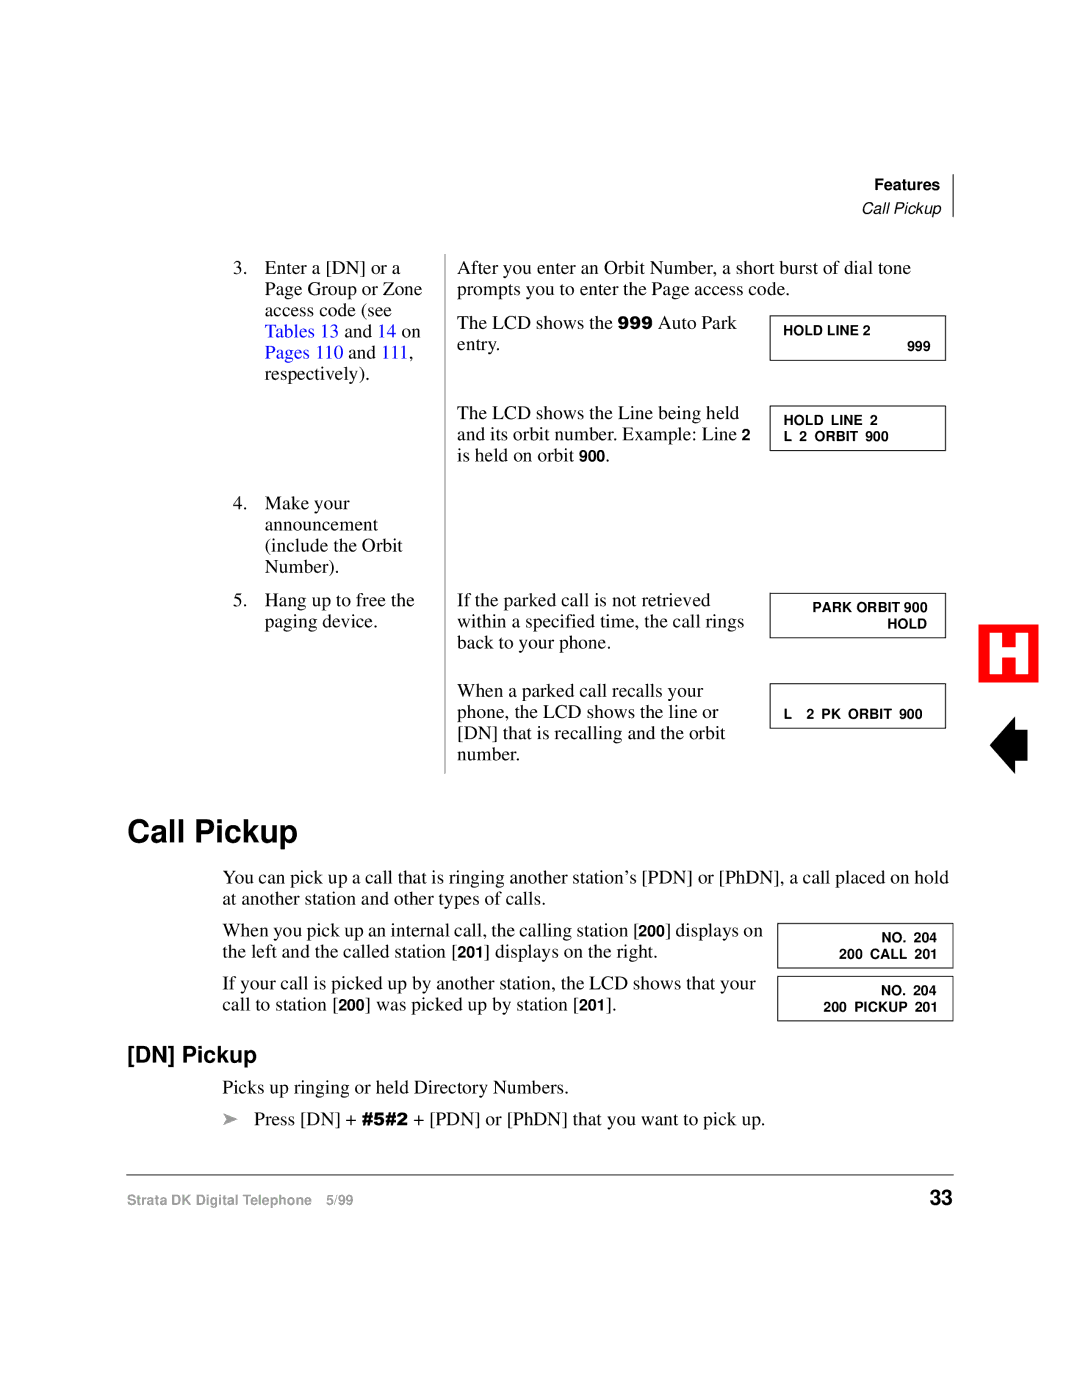 Toshiba Digital Telephone manual Call Pickup, DN Pickup 